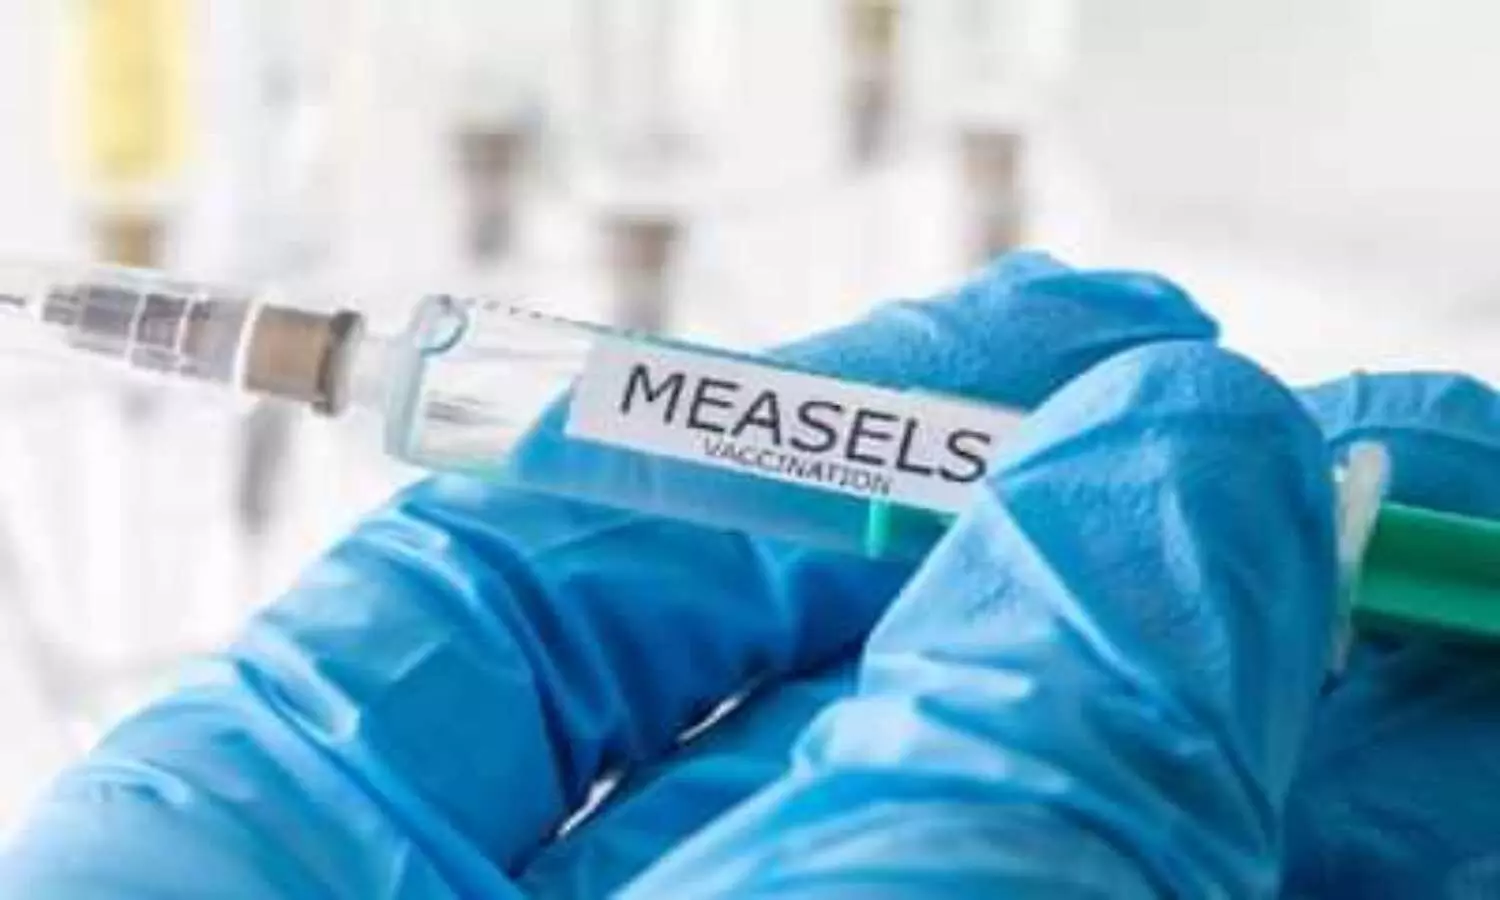 Measles treatment